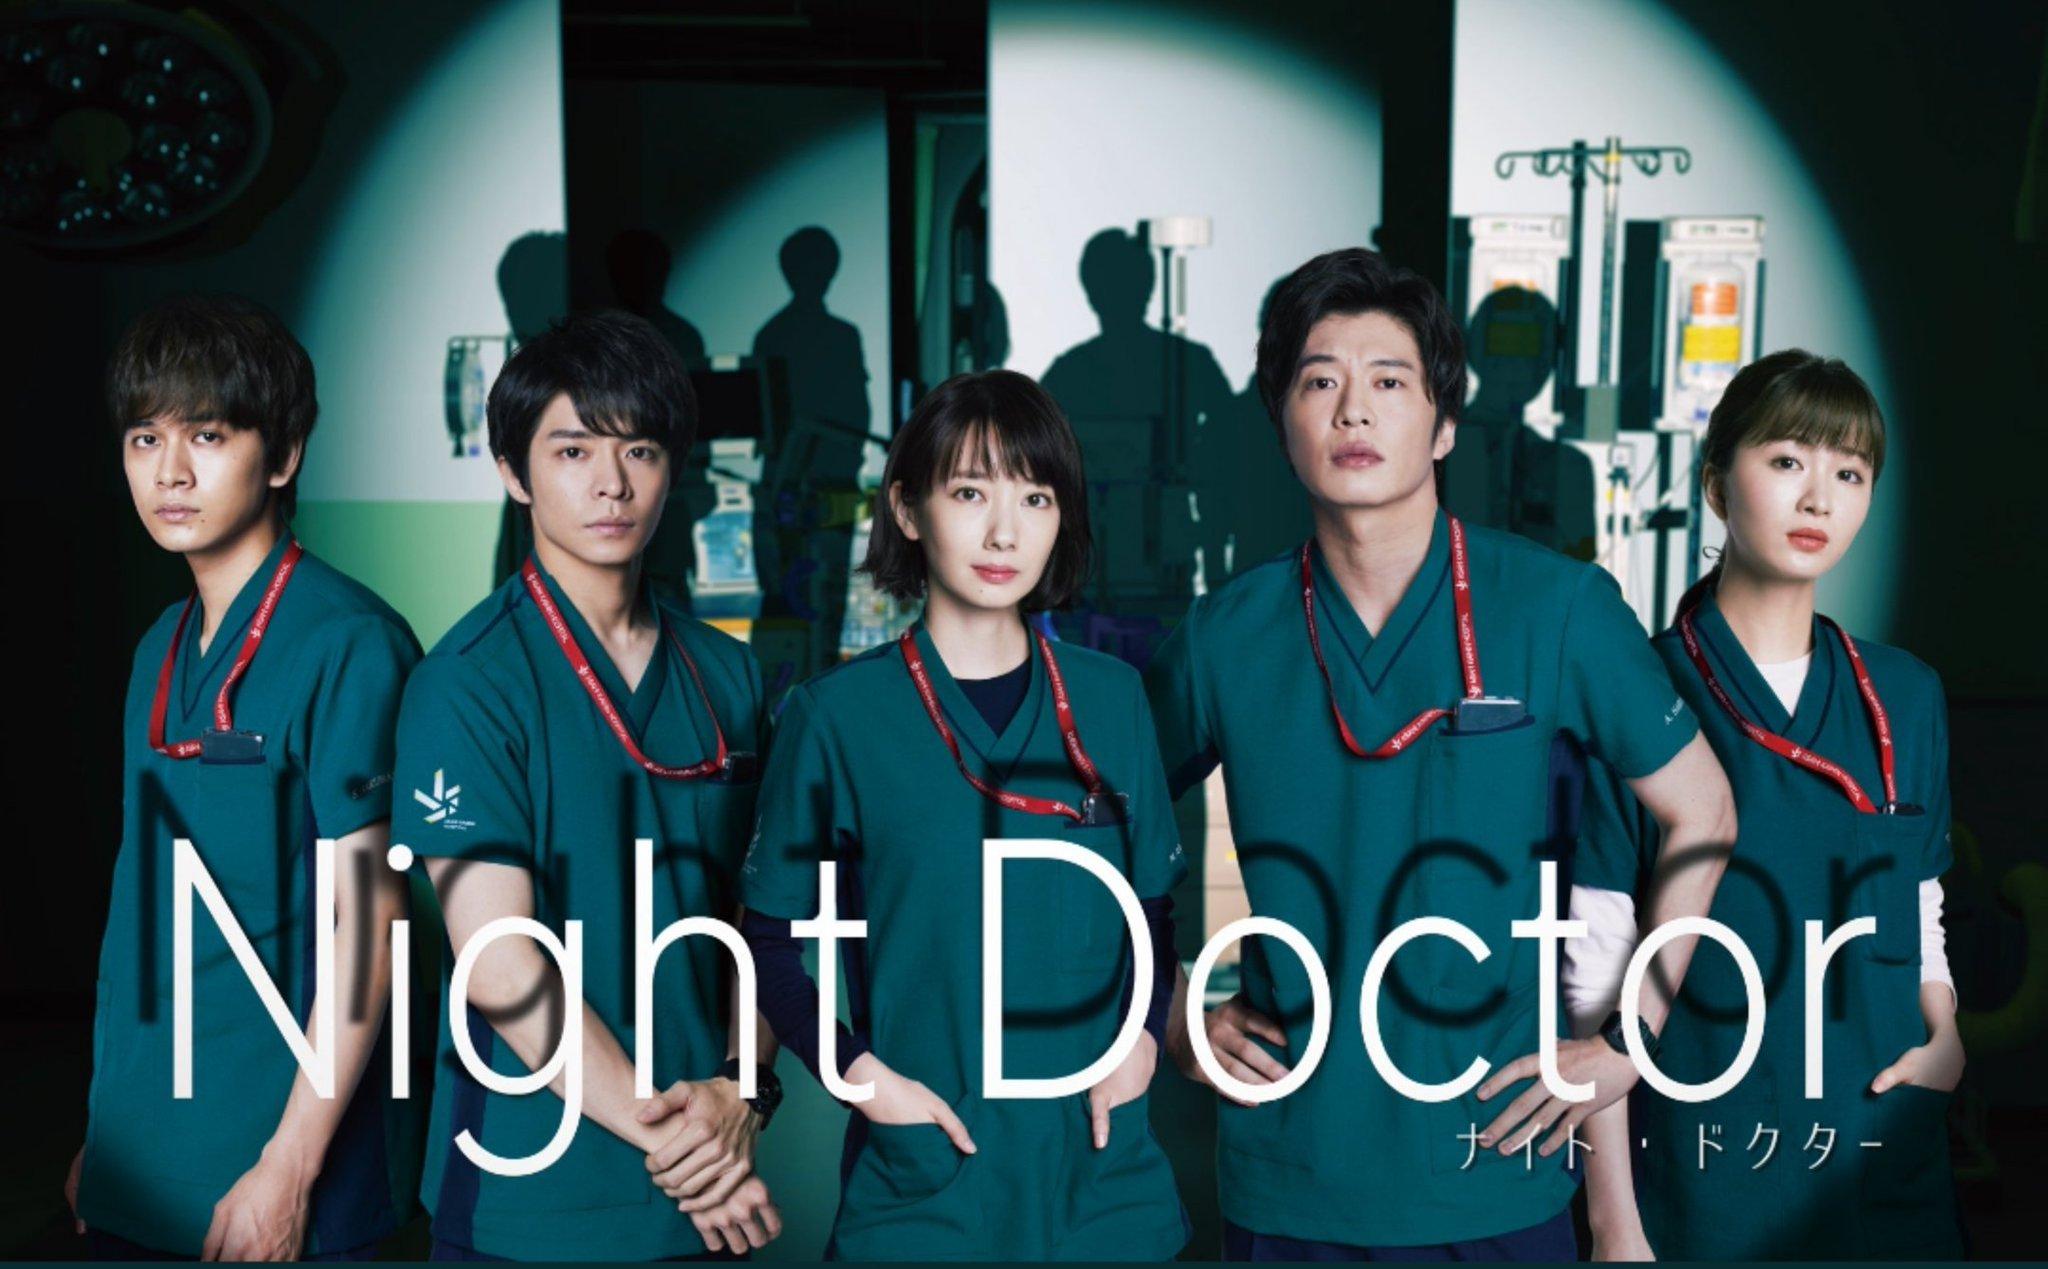 Poster phim Night Doctor. (Nguồn: Internet)